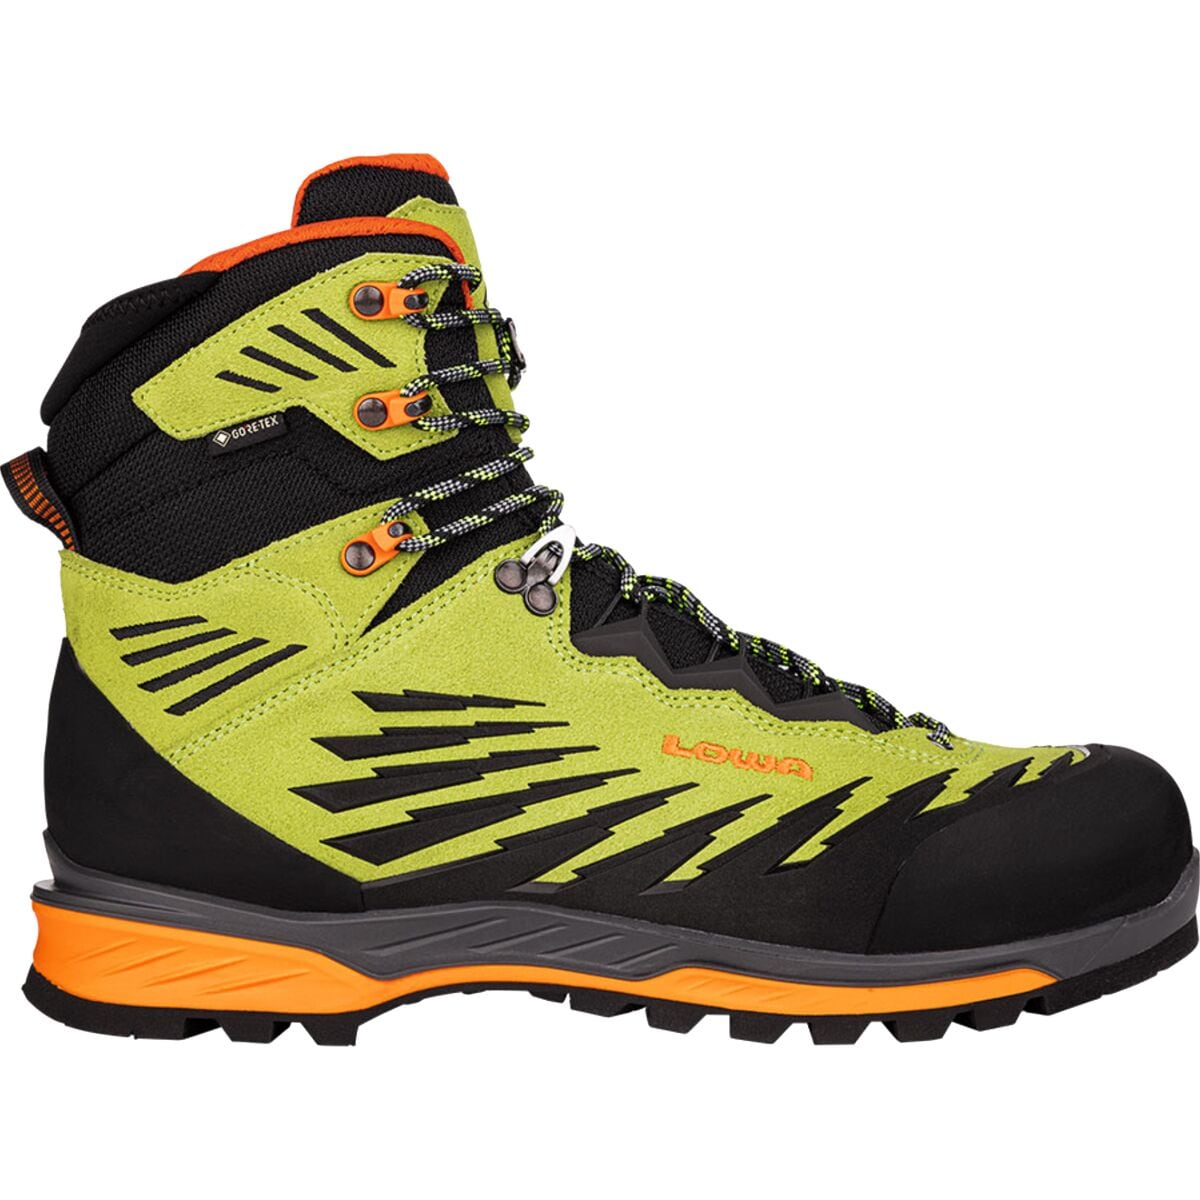 Lowa Alpine Evo GTX Mountaineering Boot - Men's